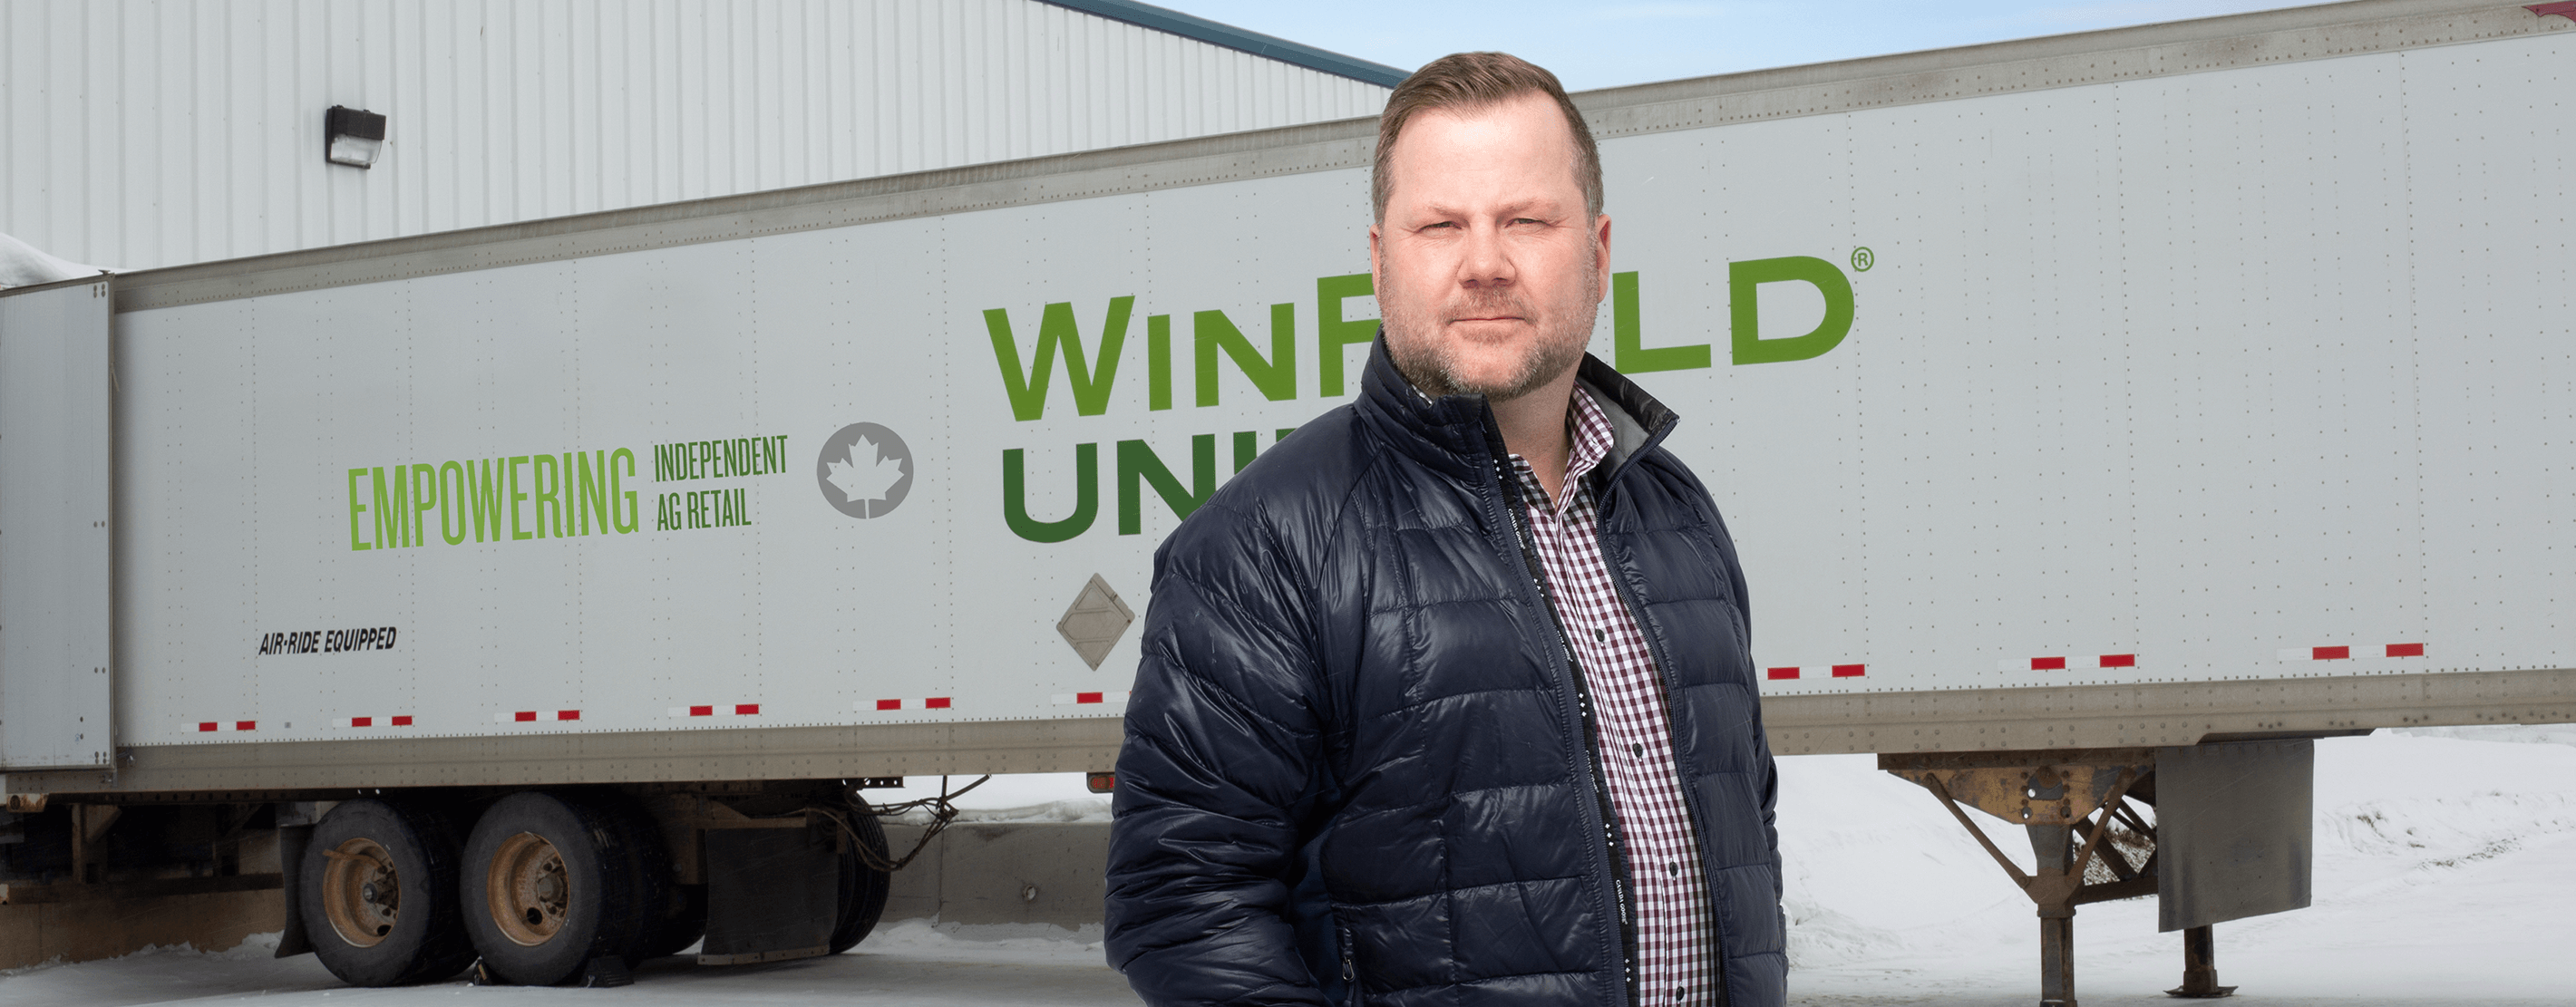 Greg McDonald Standing Next To A WinField United Truck